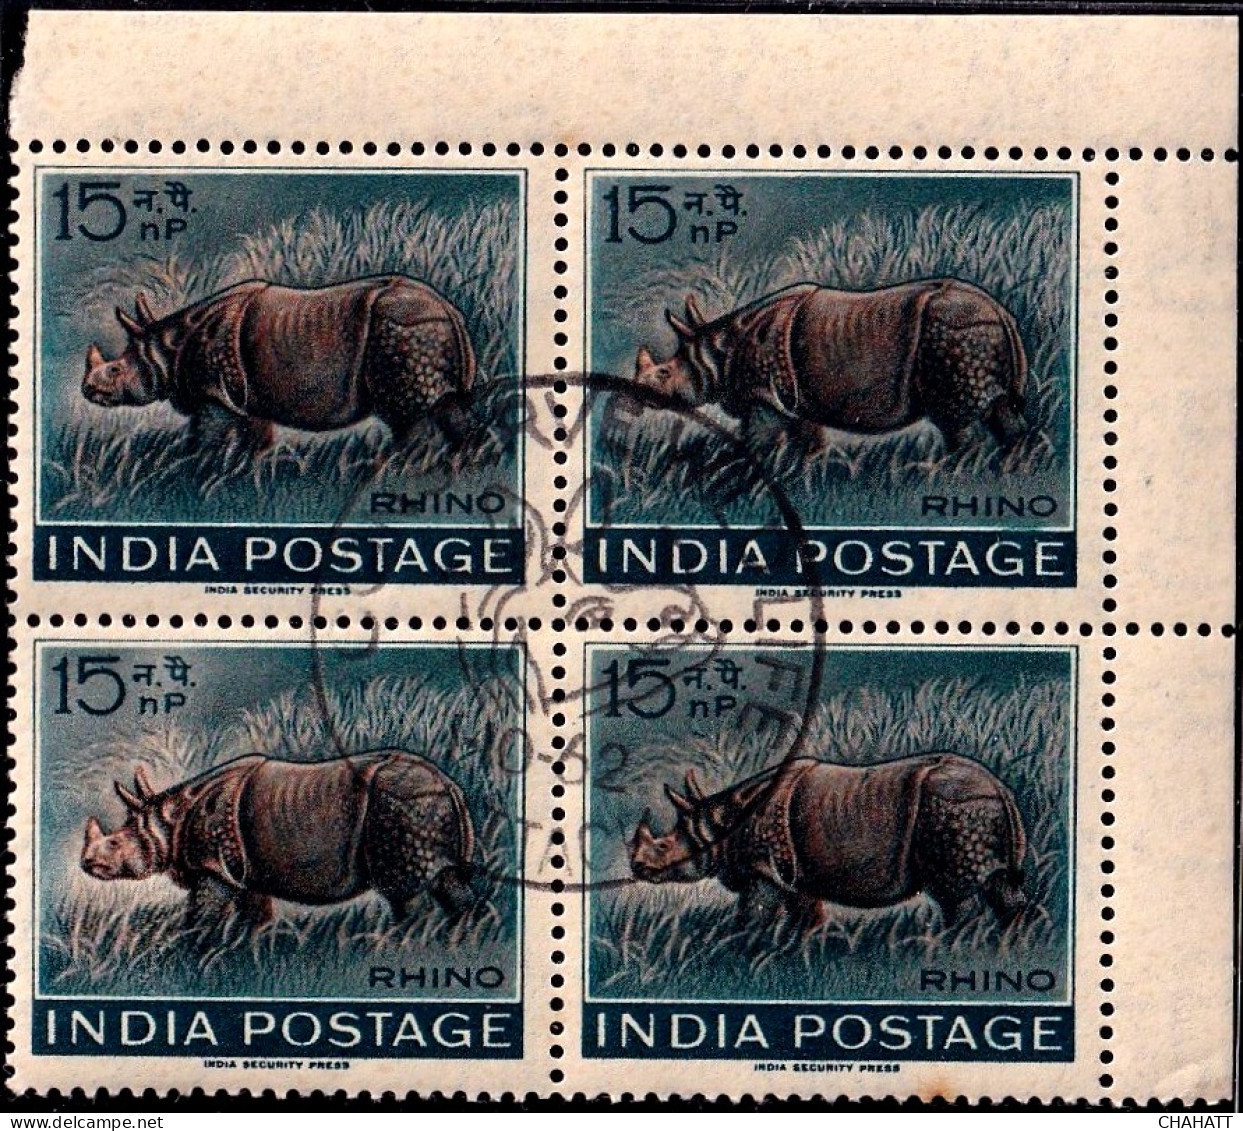 INDIA-1962- WILDLIFE WEEK- RHINOCEROS- BLOCK OF 4 WITH PICTORIAL CANCEL- ERROR-DRY PRINT-"BHARAT" OMITTED-MNH-IE-66-2 - Varietà & Curiosità